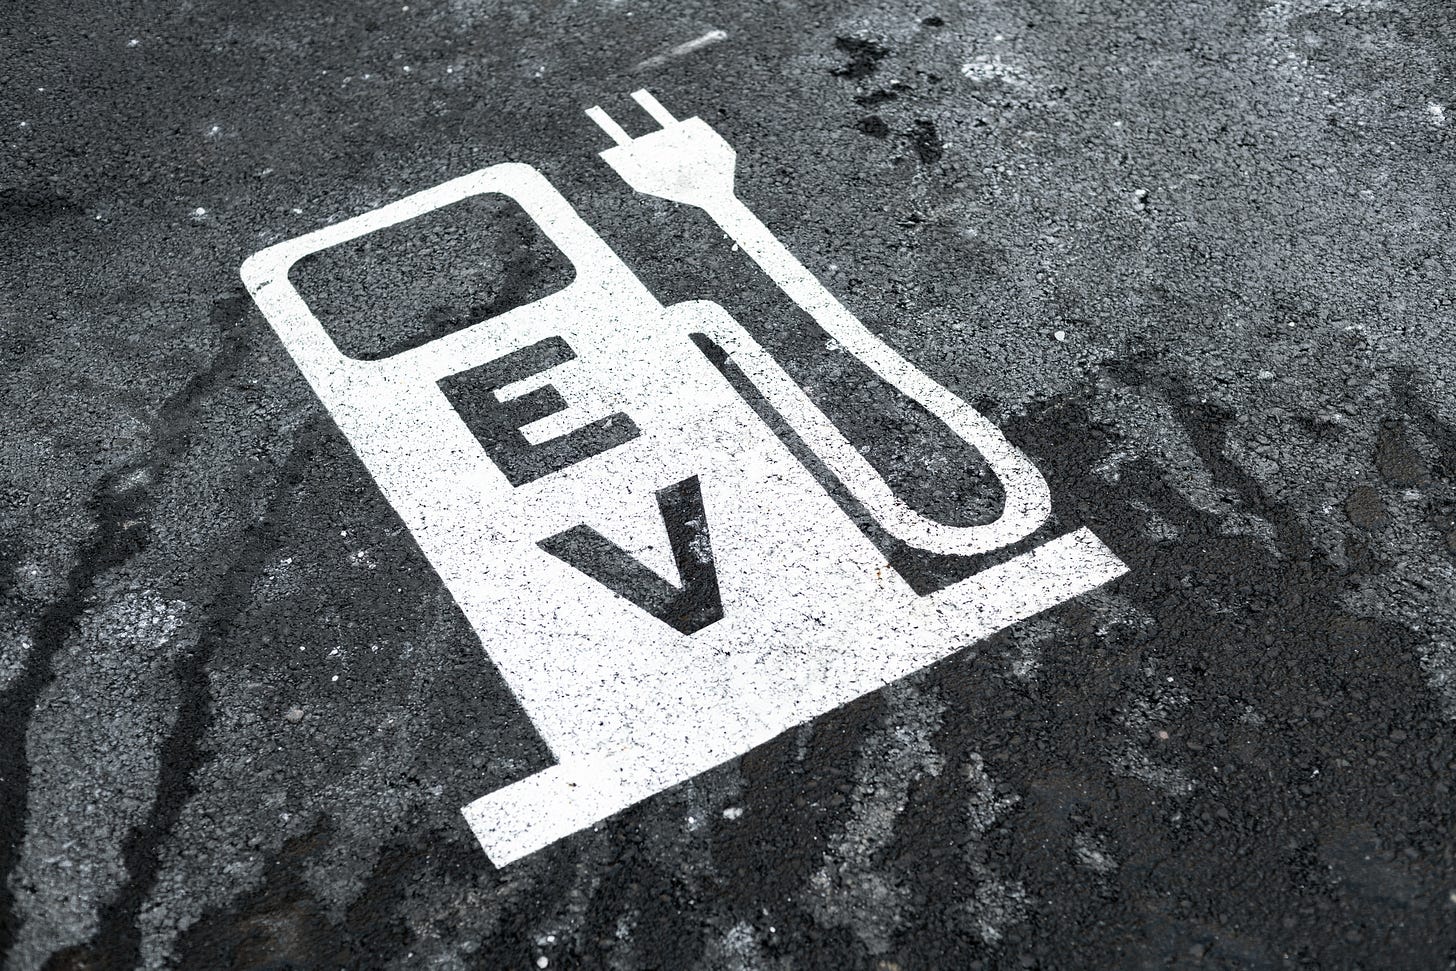 An electric vehicle logo printed on asphalt.